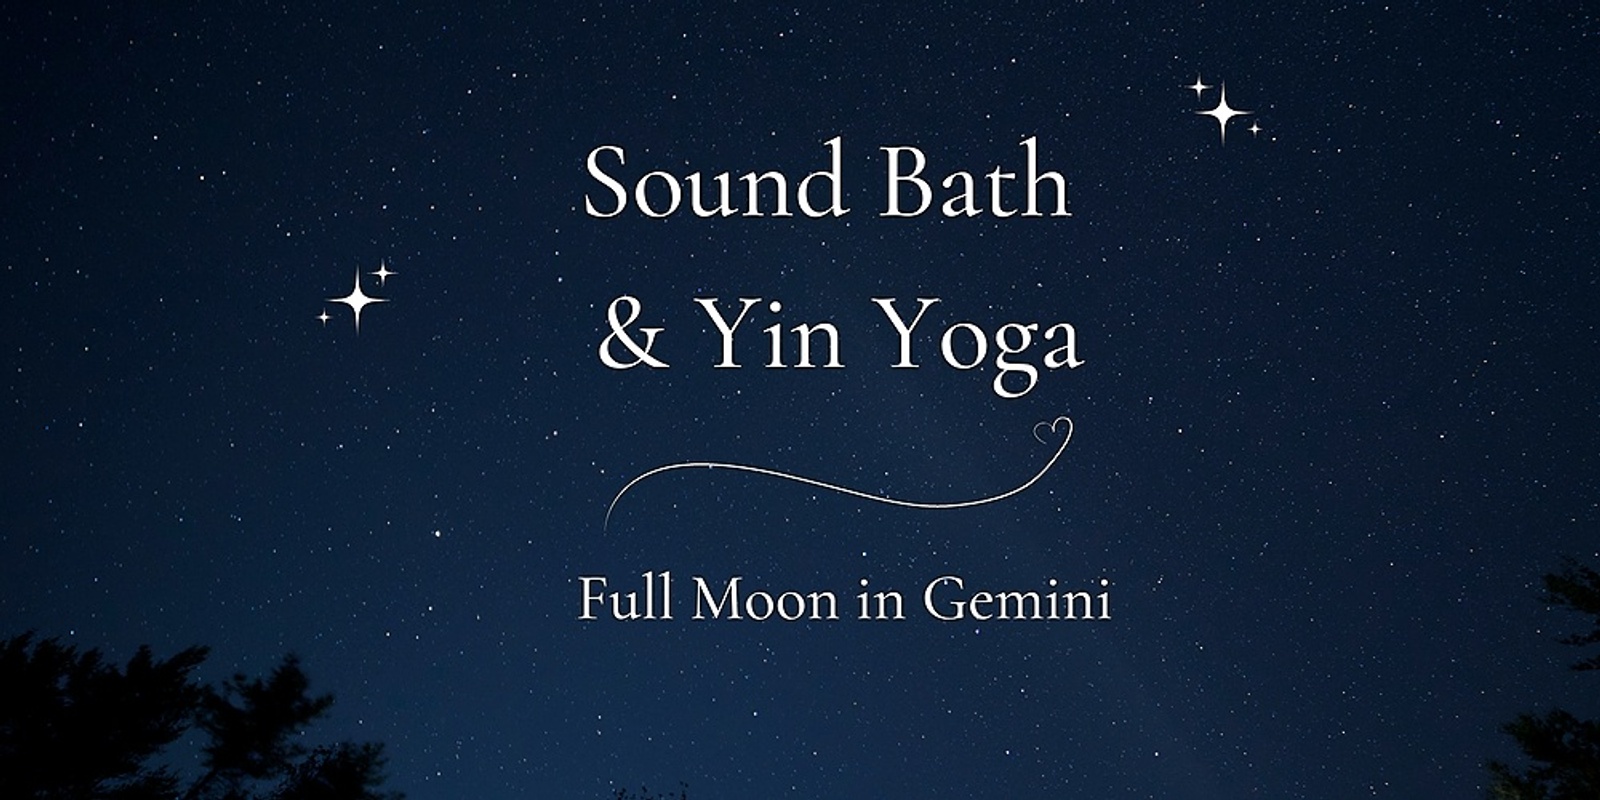 Banner image for Yin Yoga & Sound Bath: Full Moon in Gemini